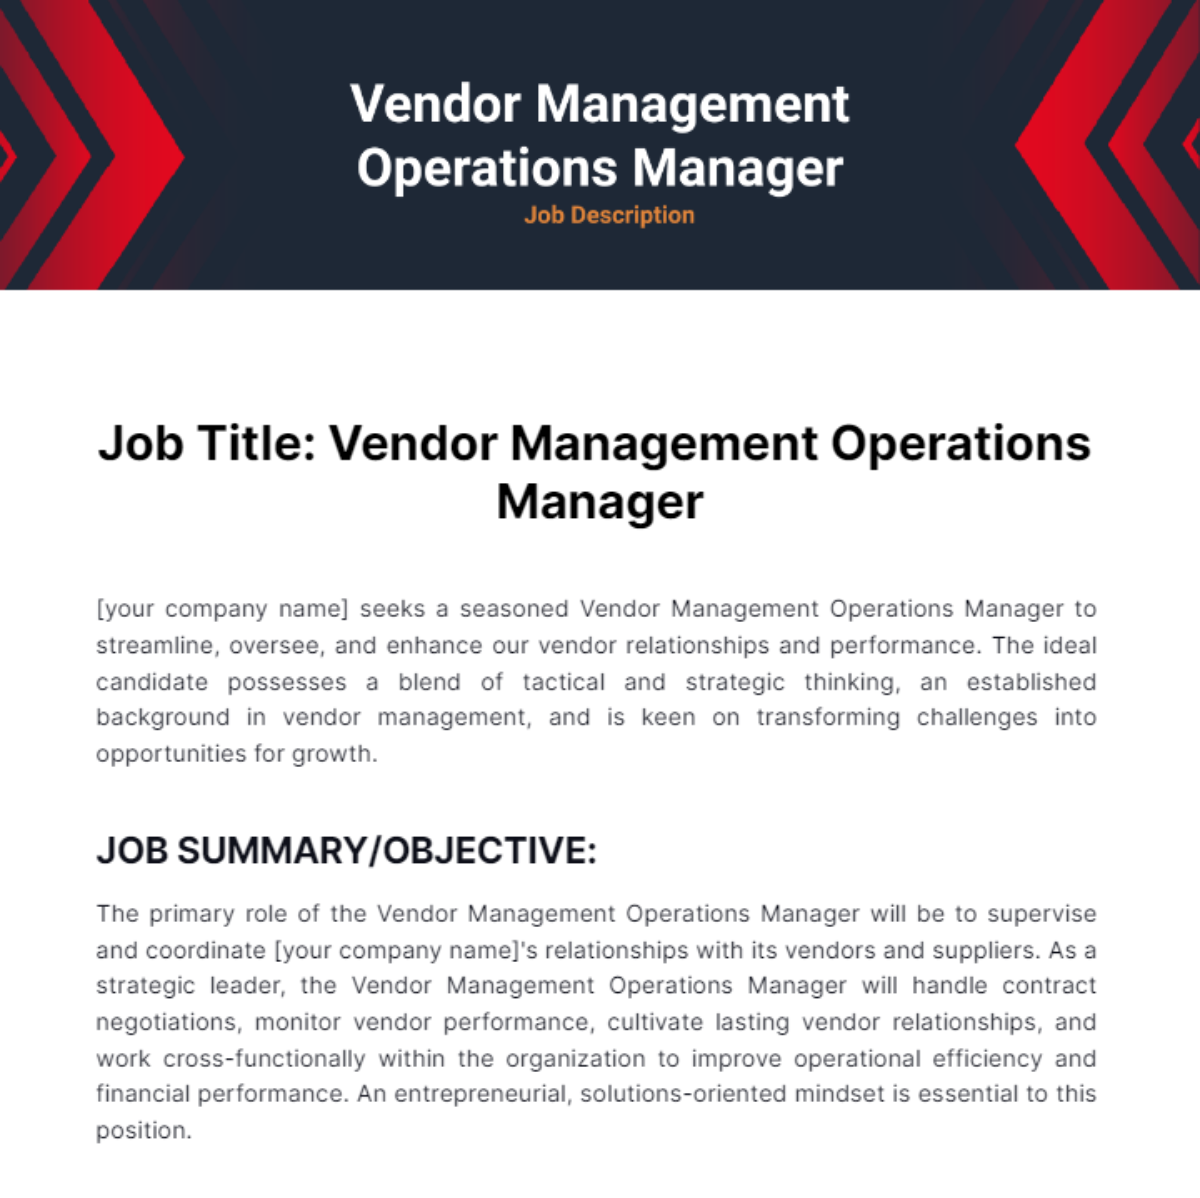 Vendor Management Operations Manager Job Description Template